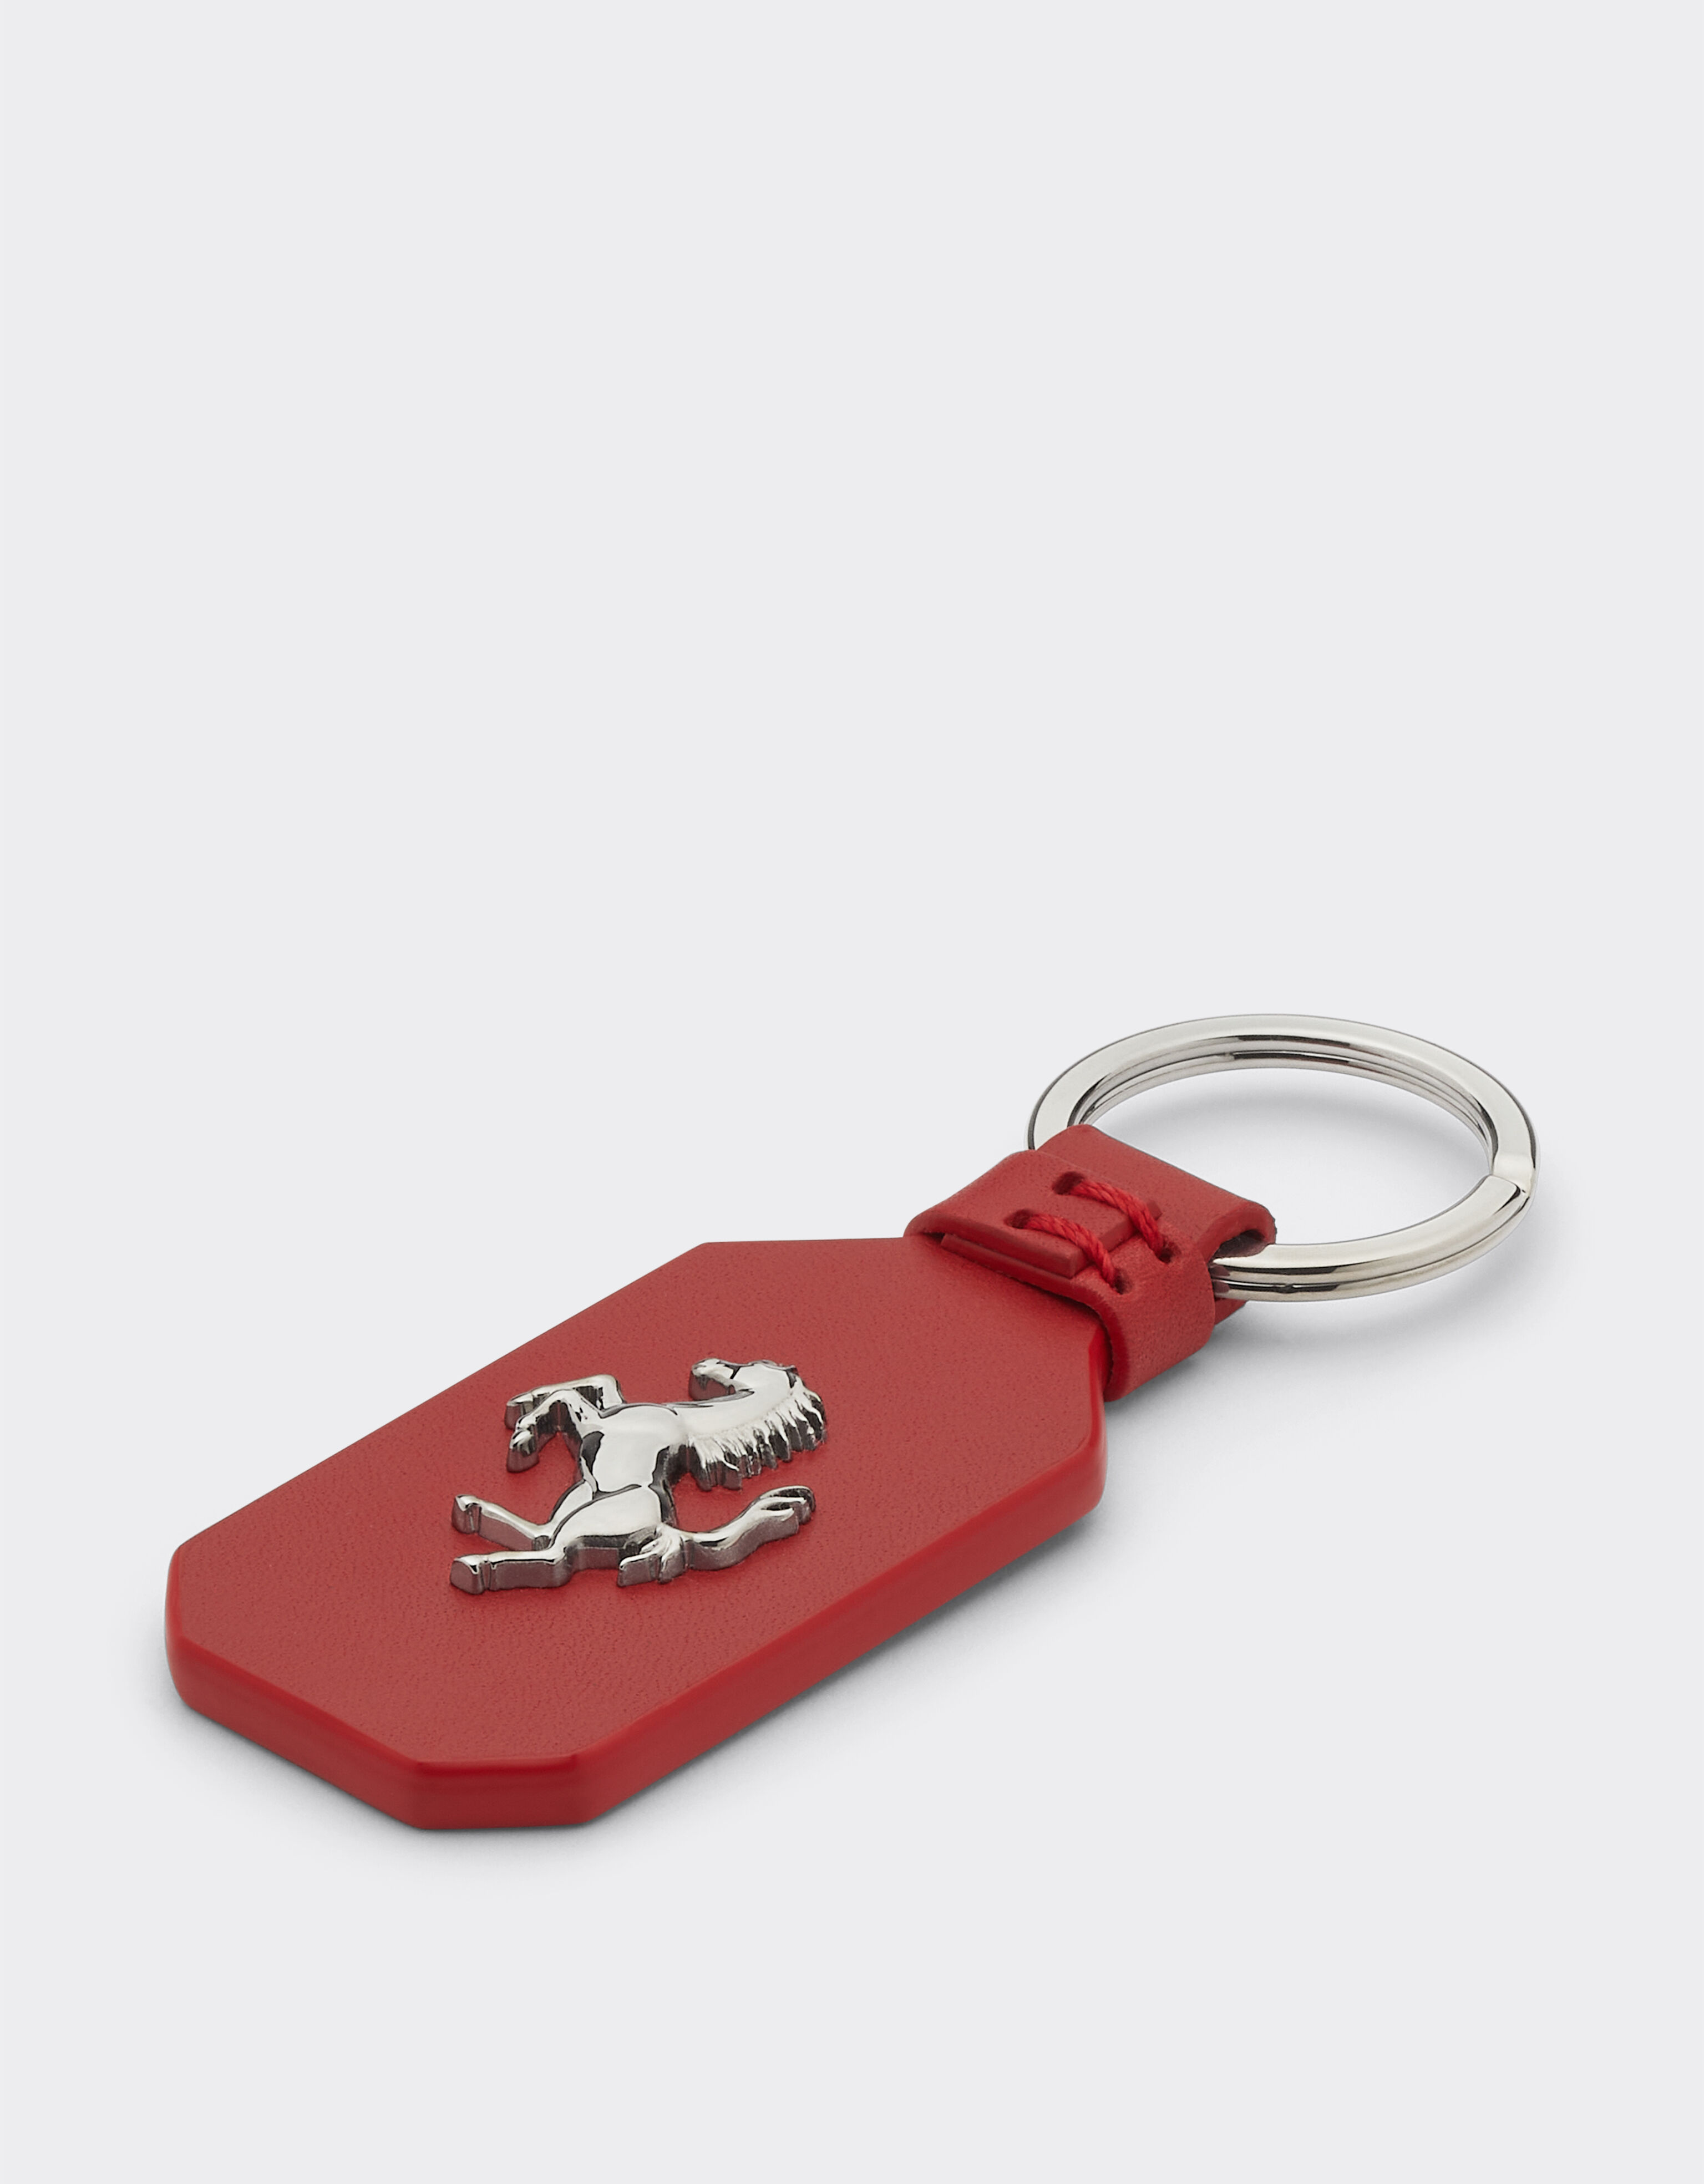 Ferrari 跃马装饰皮革钥匙扣 Rosso Corsa 红色 47156f